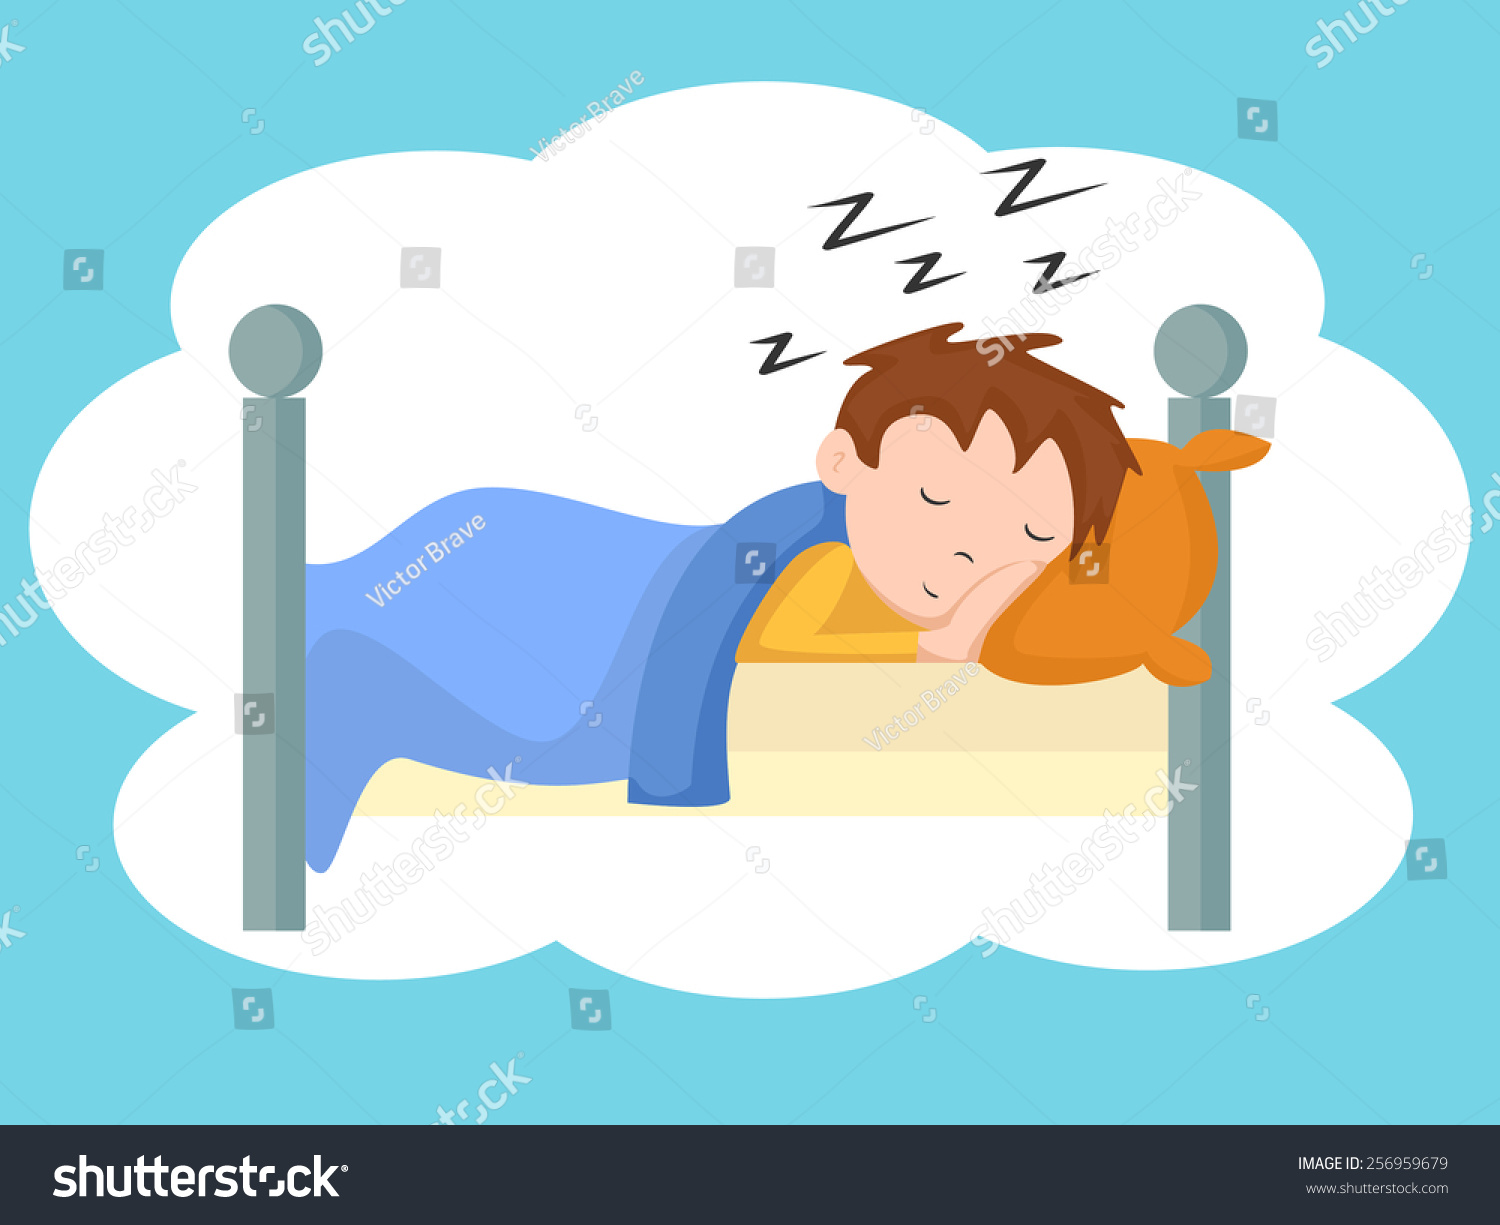 Child Sleeping Vector Illustration Stock Vector 256959679 - Shutterstock